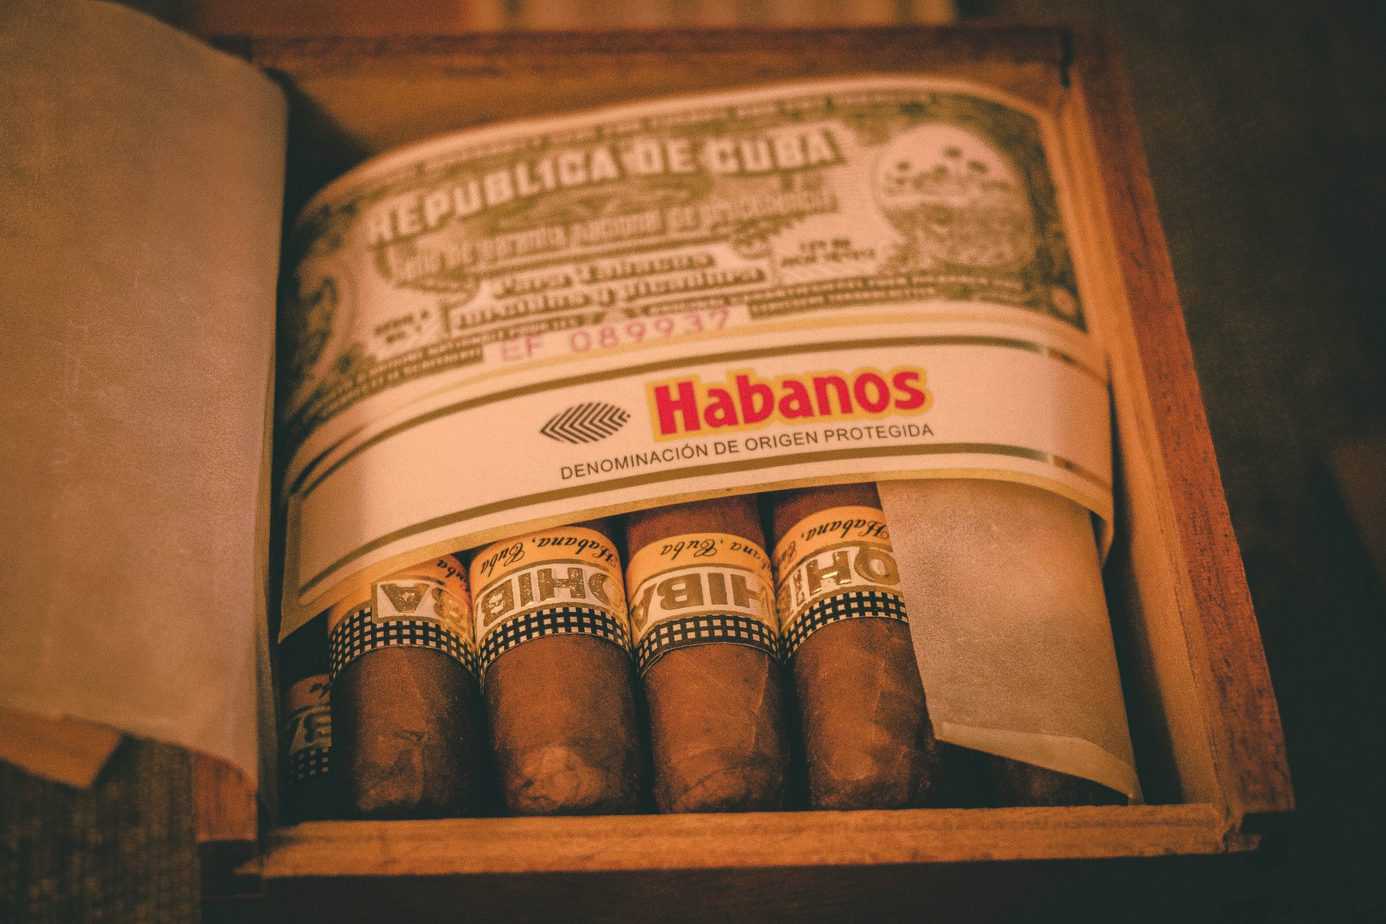 Authentic Cuban cigars